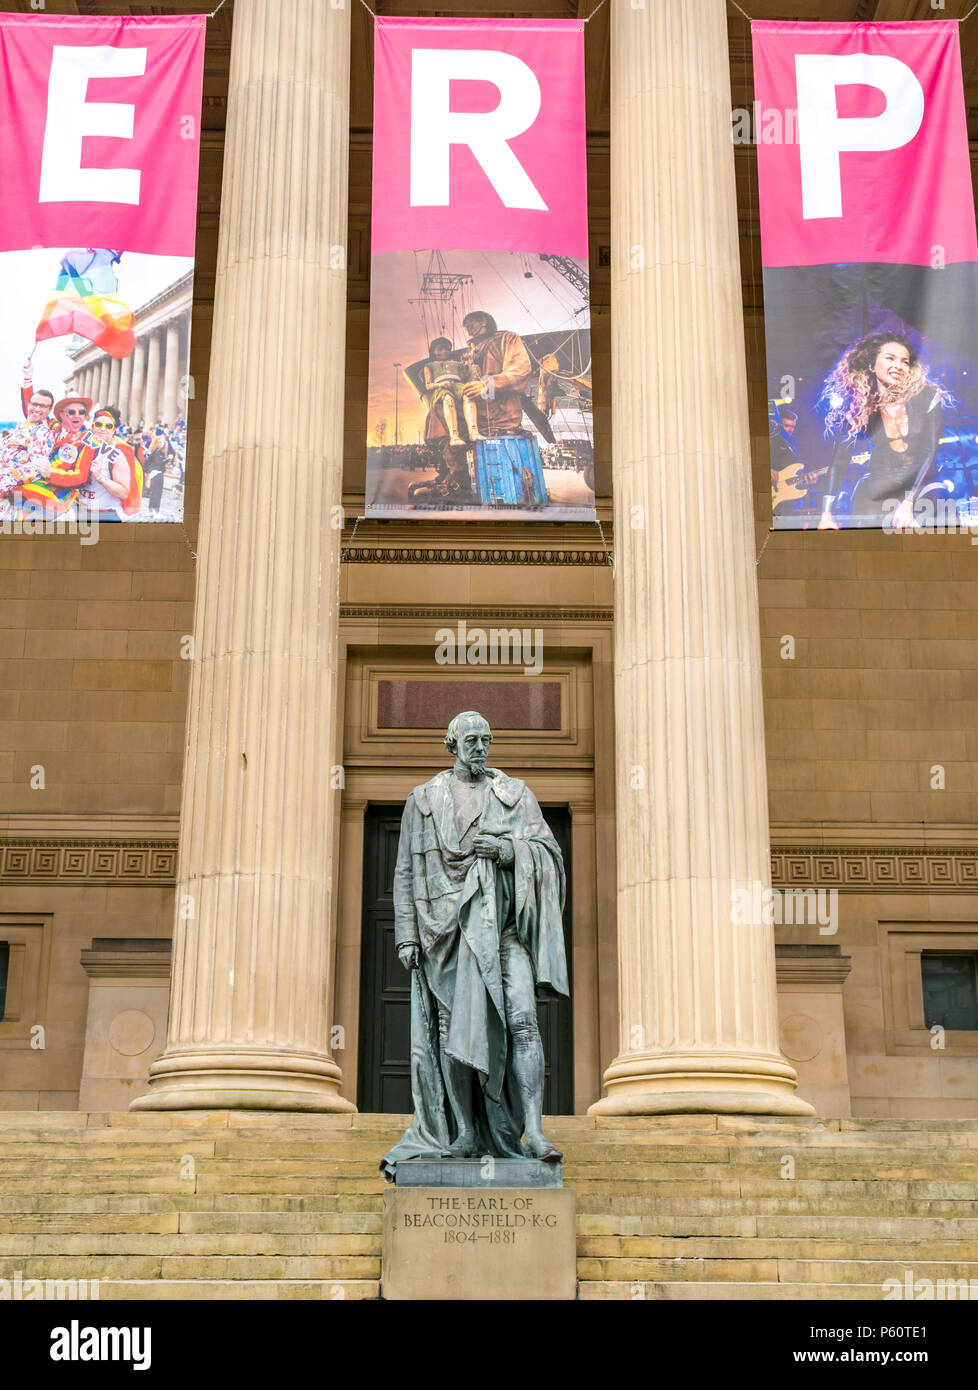 Statue of Earl of Beaconsfield, Benjamin Disraeli, St George's Hall, civic venue, Liverpool, England, UK Stock Photo